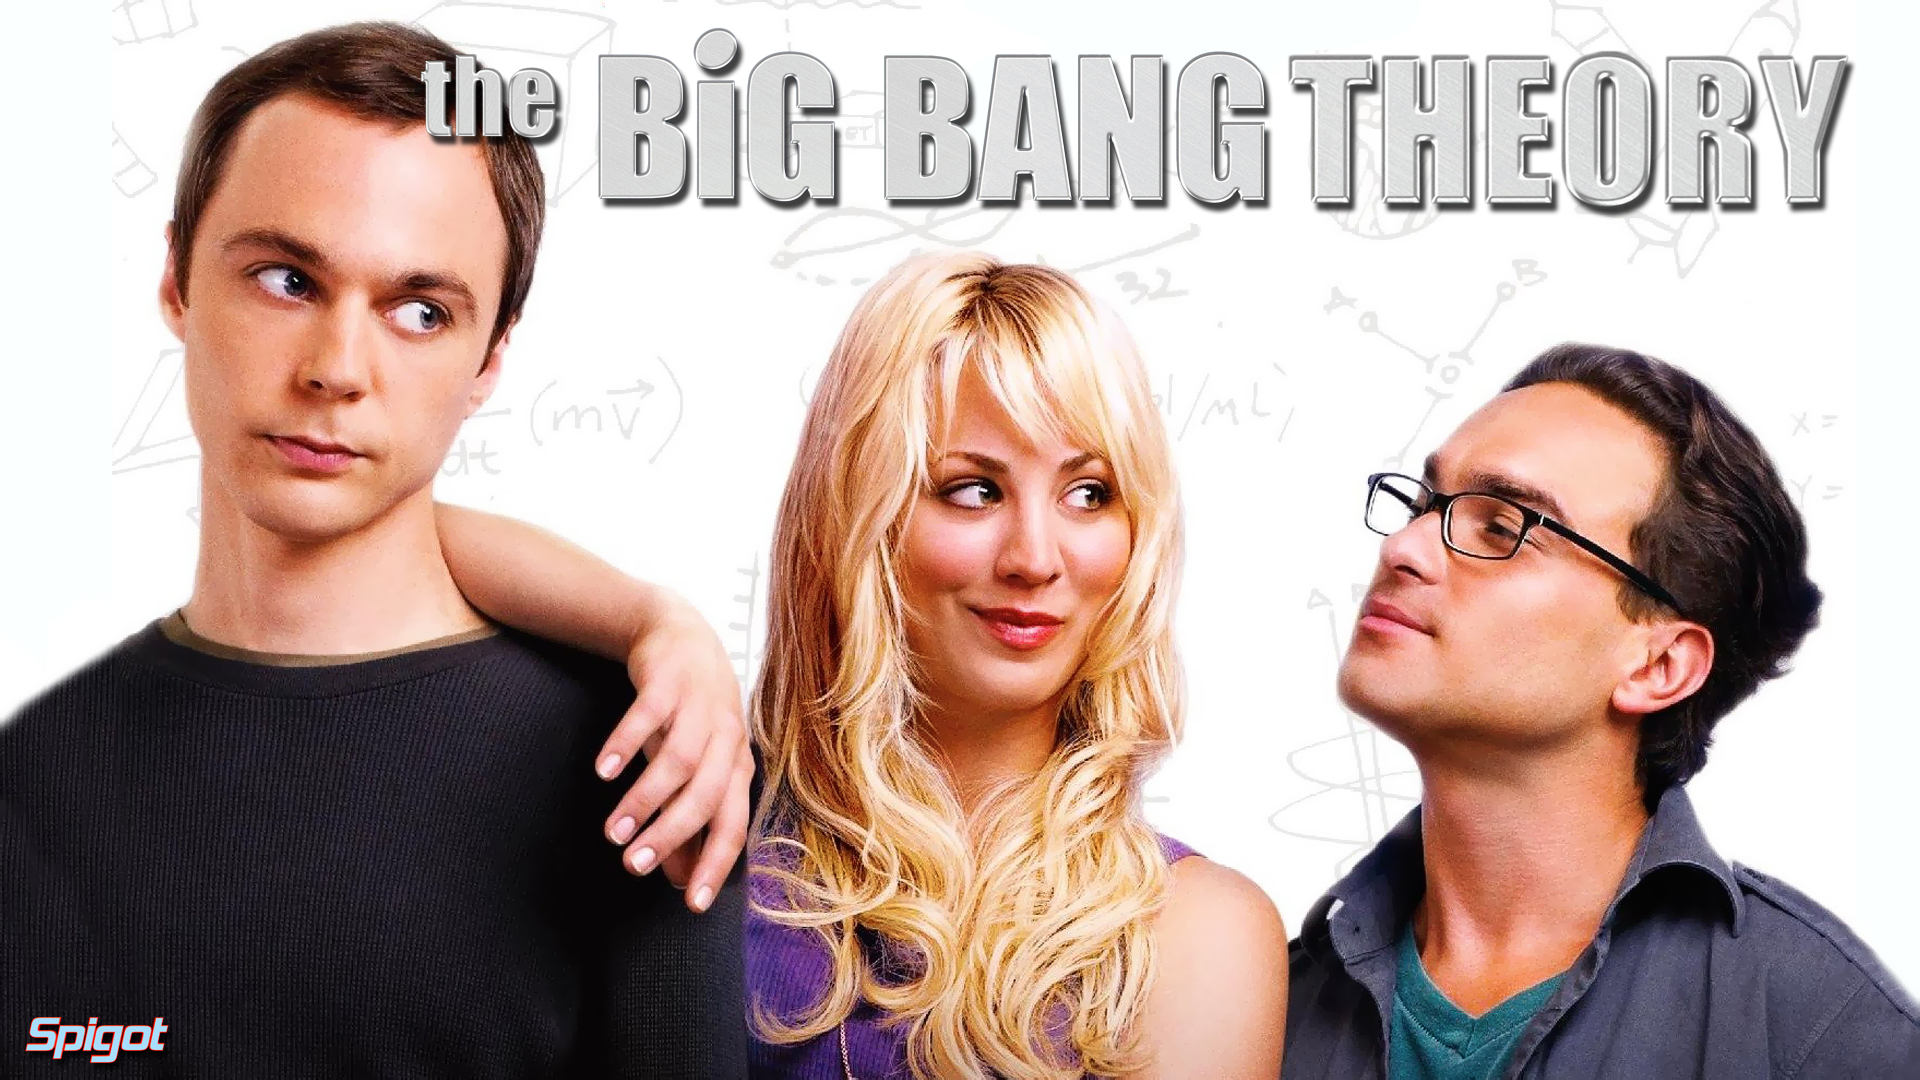 The Big Bang Theory. George Spigot's Blog